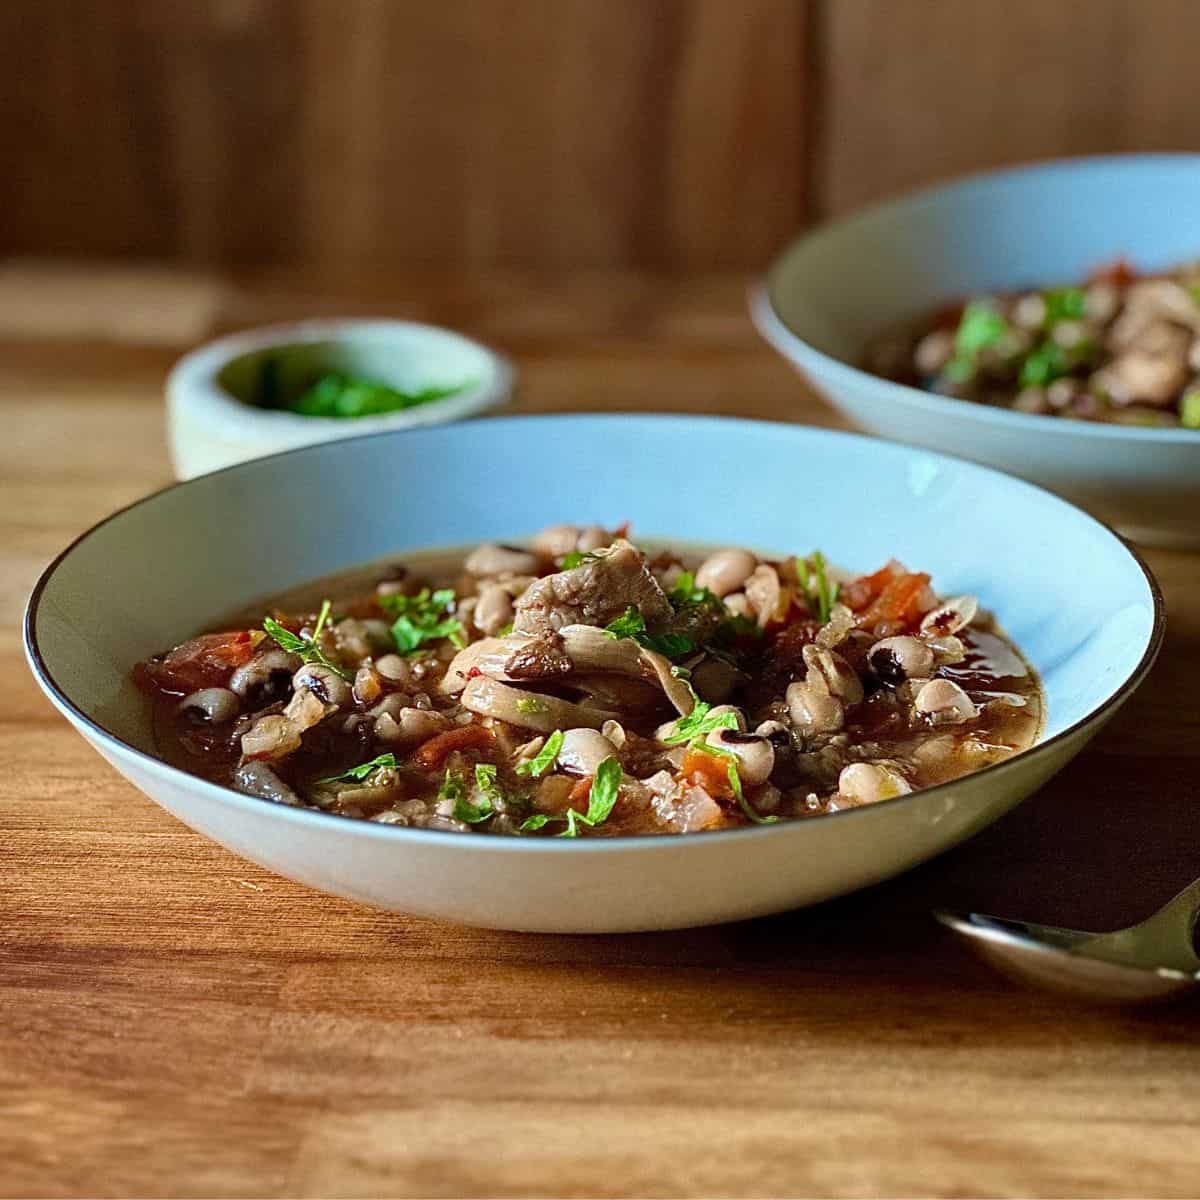 A bowl containing black-eye pea and mushroom stew.